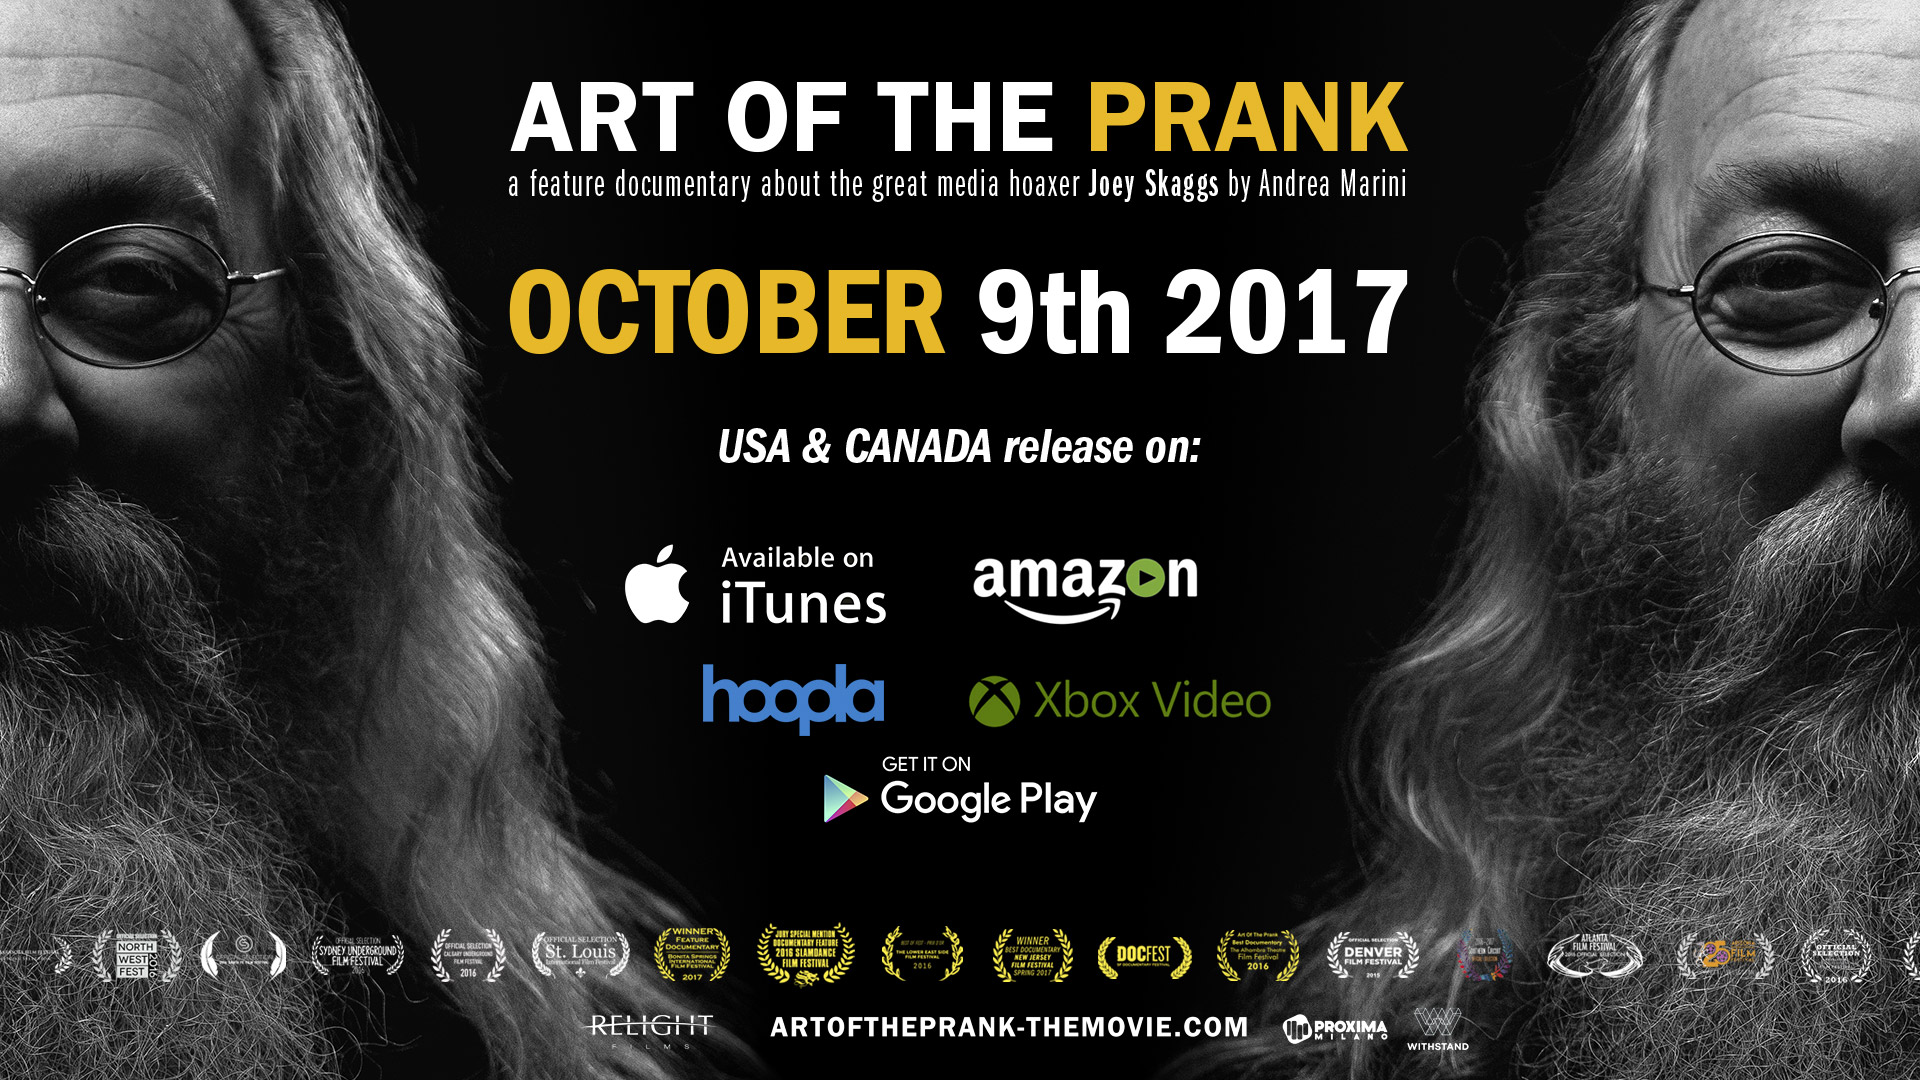 ART OF THE PRANK VOD Release October 9, 2017